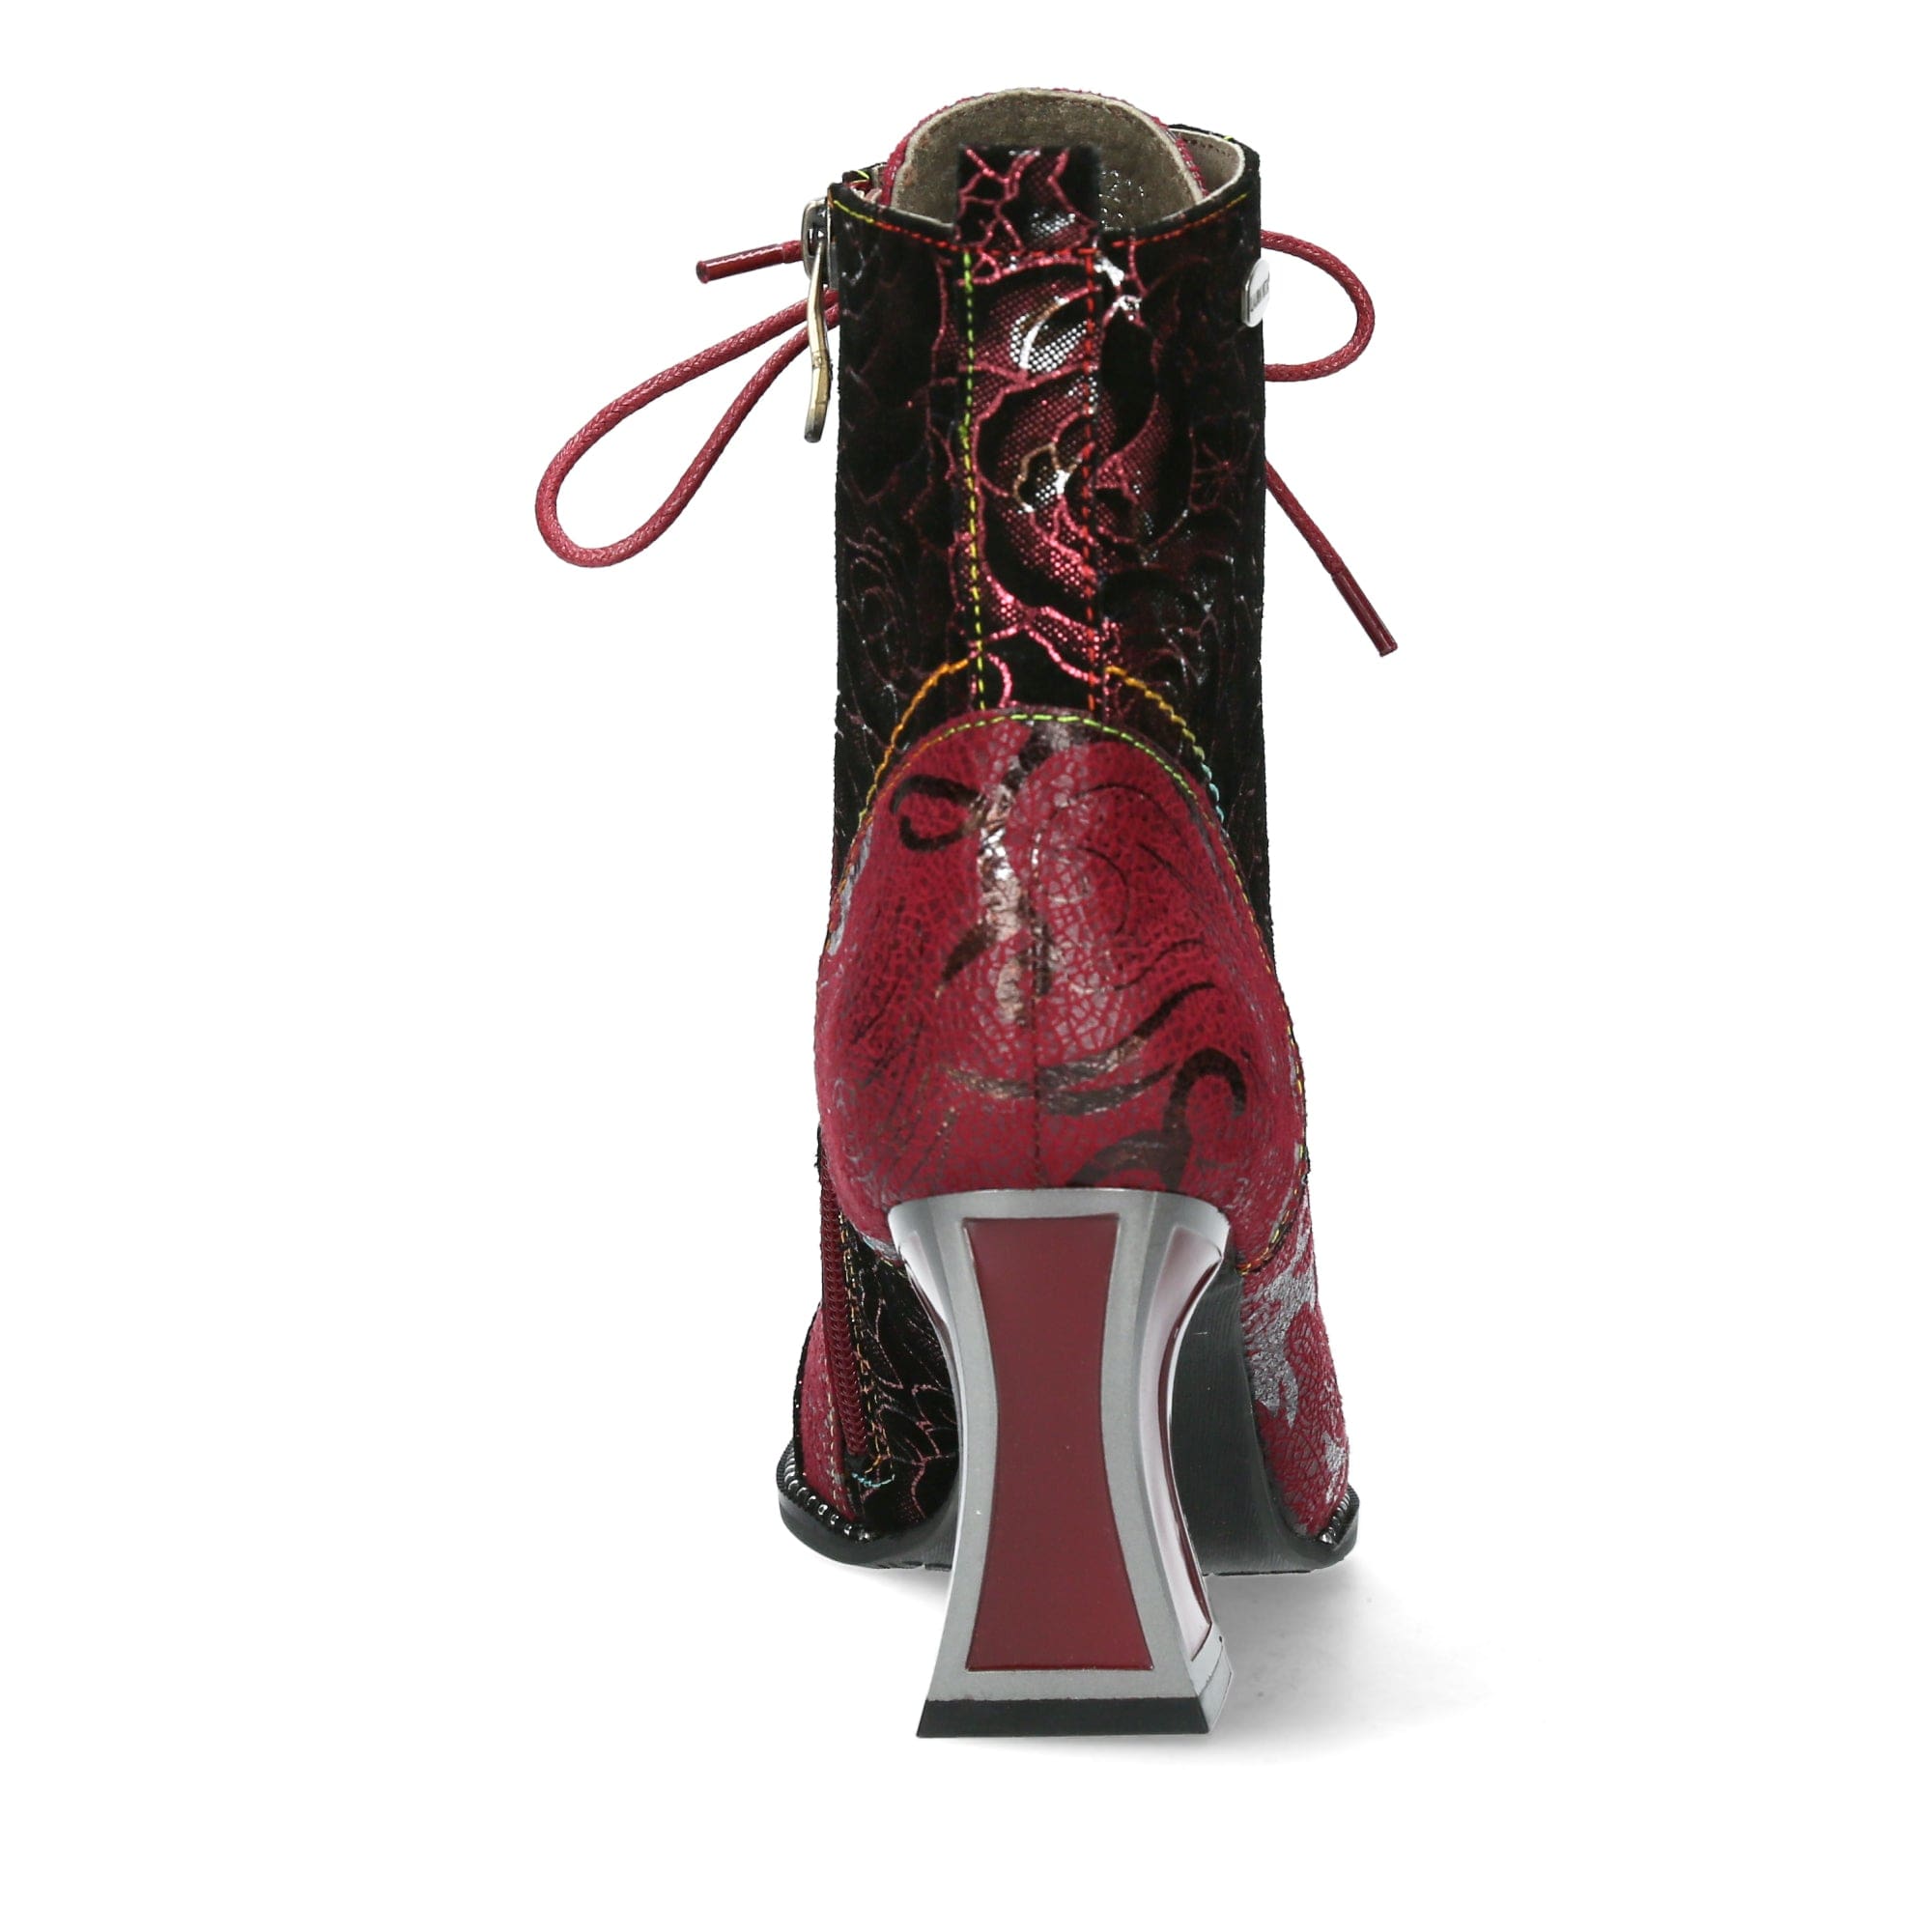 Schuh JACBO 0123 - Boots